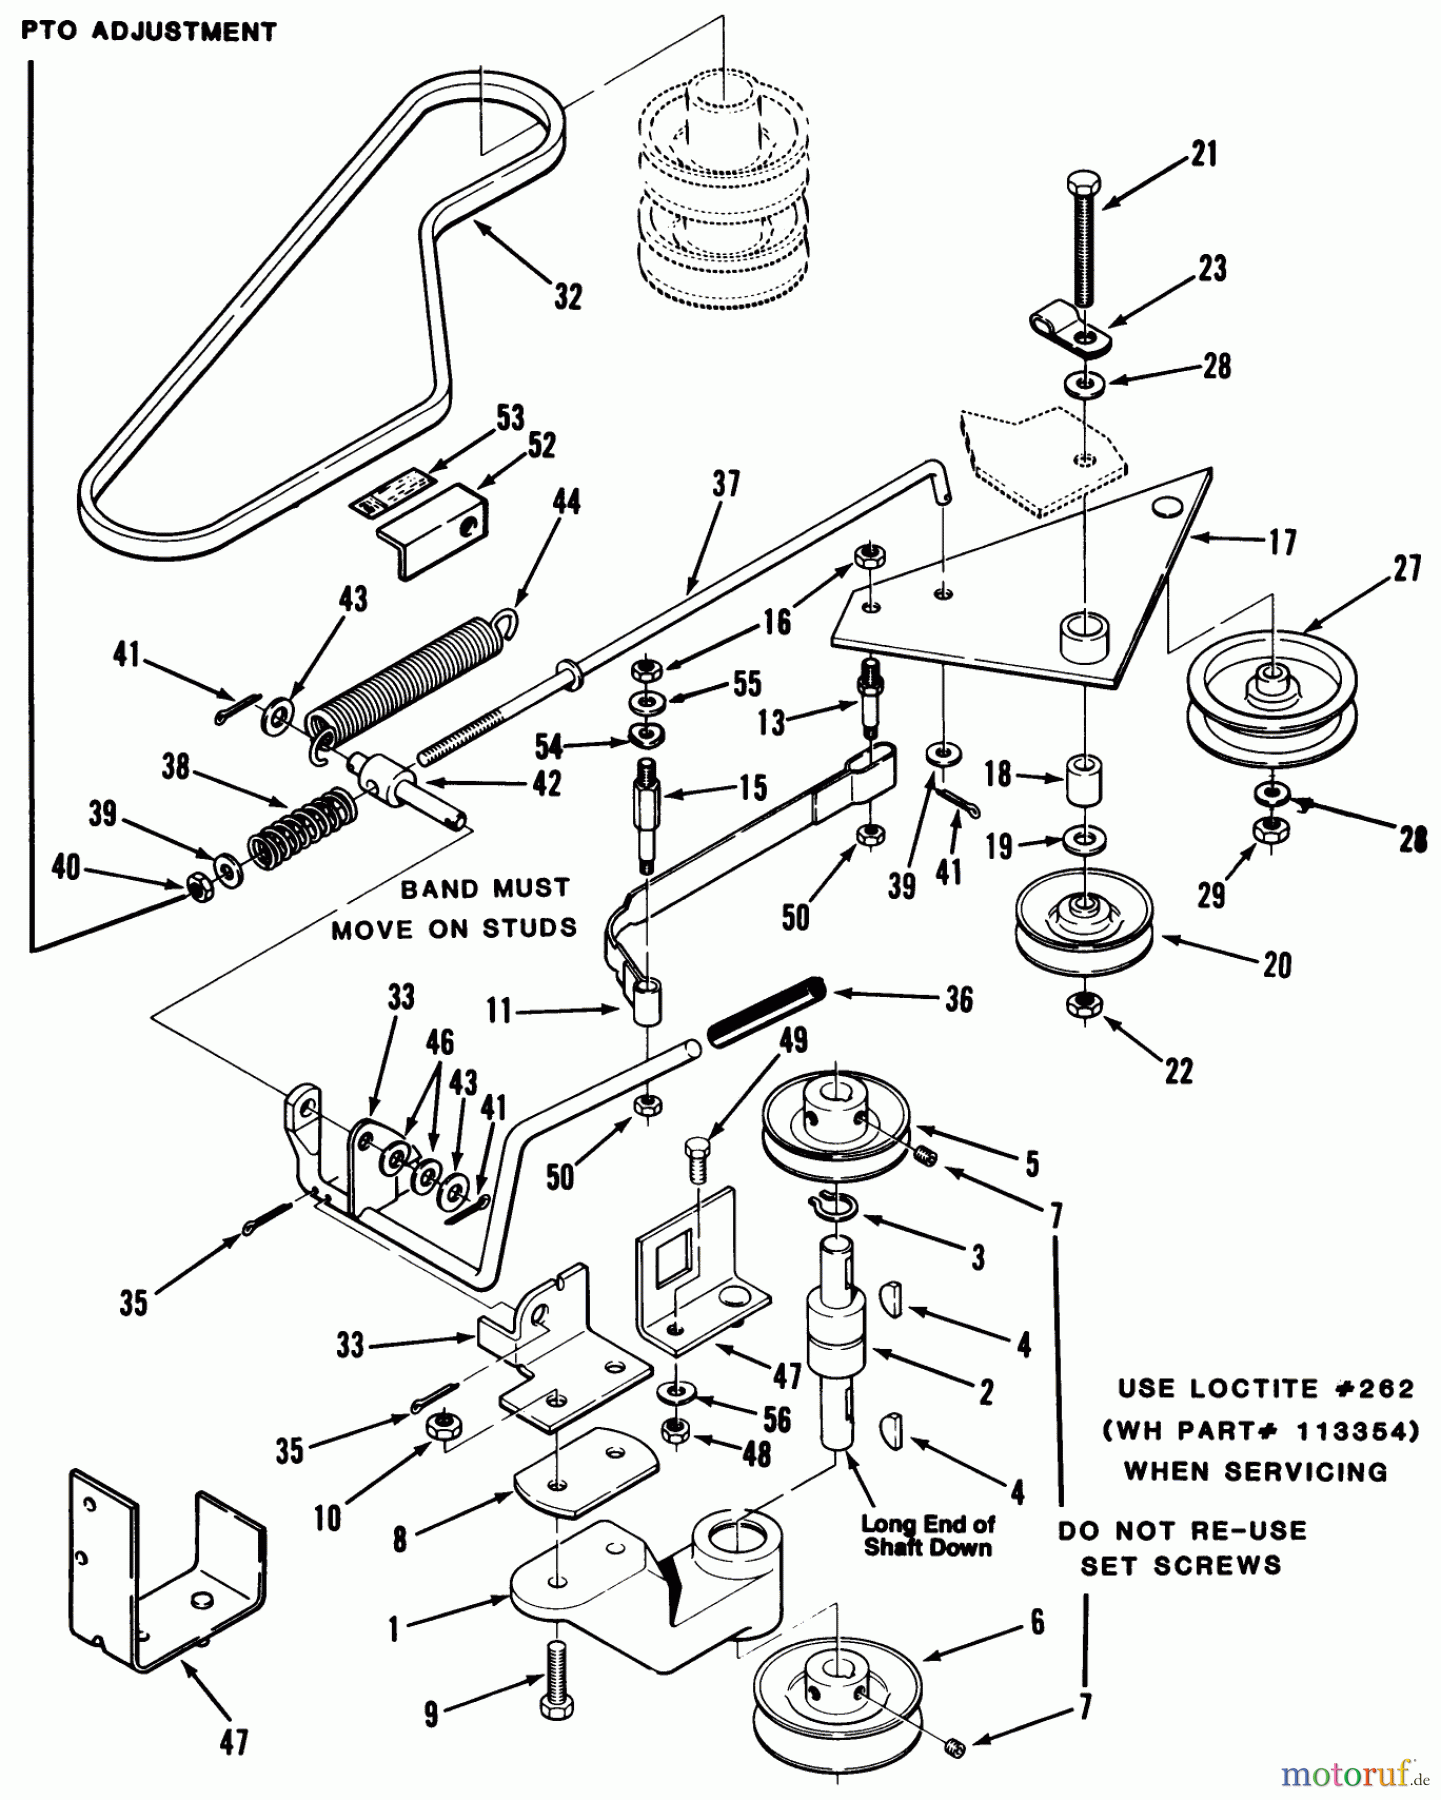  Toro Neu Mowers, Rear-Engine Rider 33-11B503 (111-5) - Toro 111-5 Rear Engine Rider, 1987 PTO CLUTCH, PULLEYS, AND CONTROLS